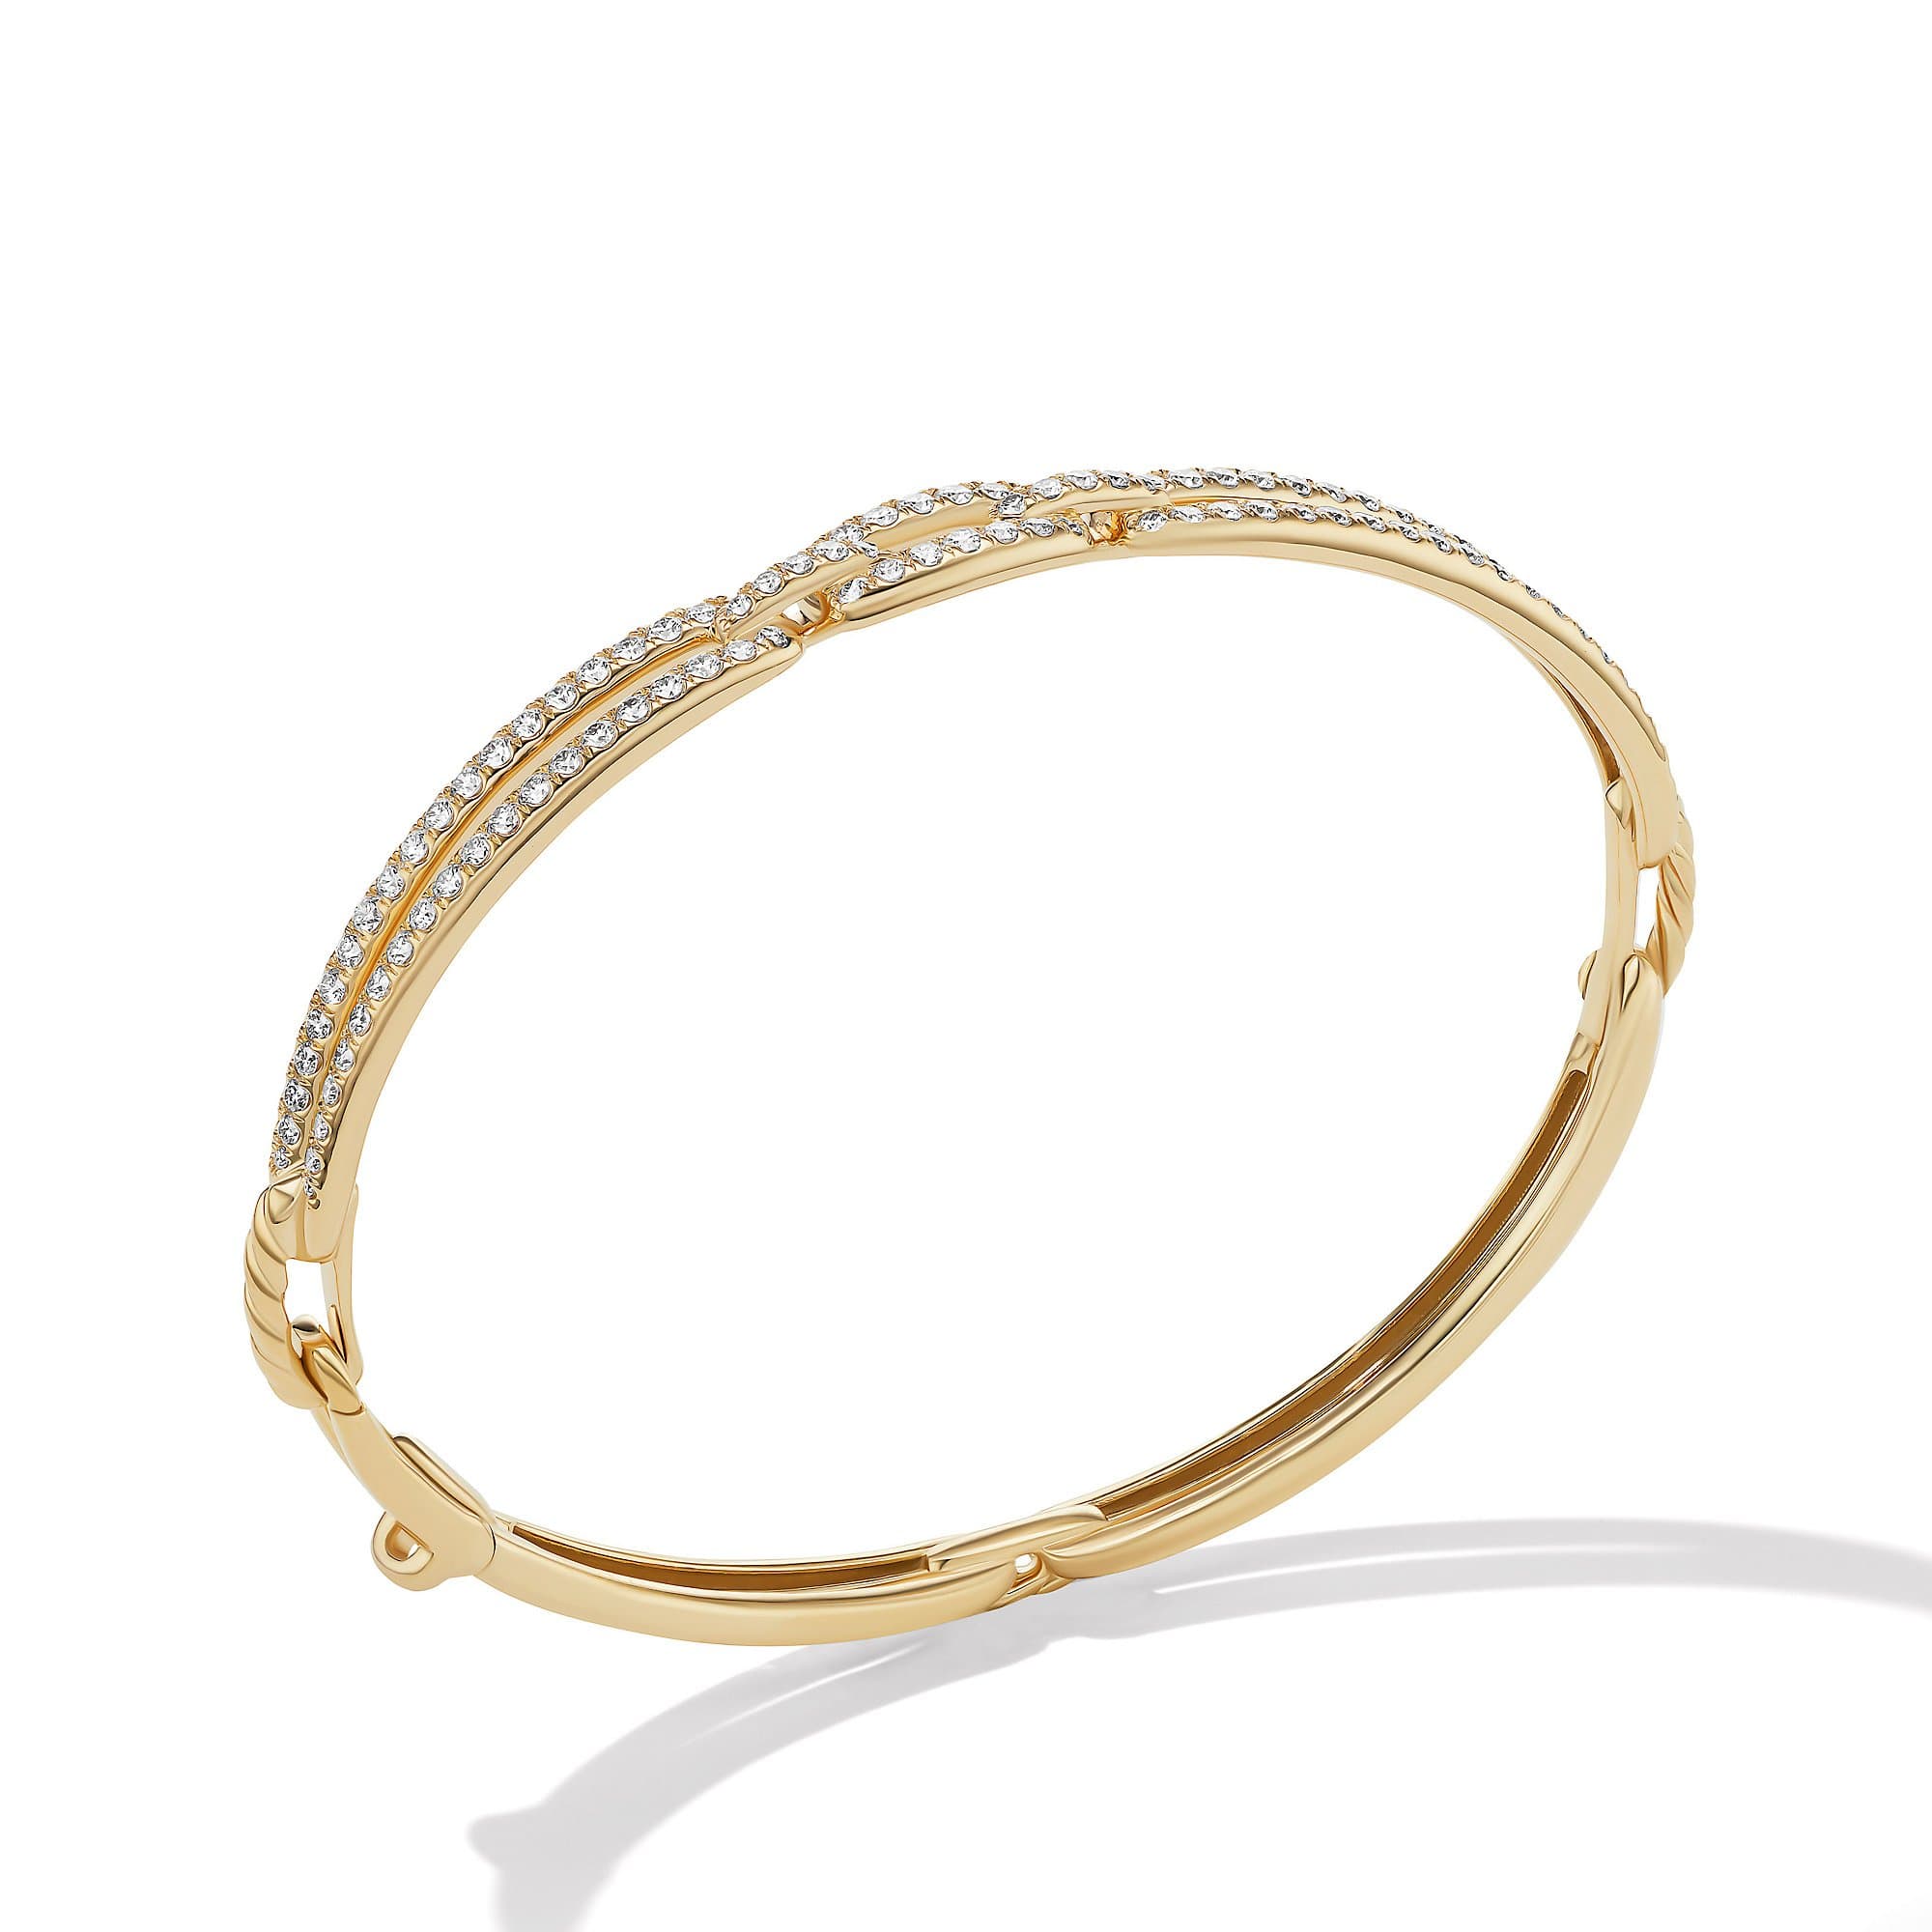 David Yurman Stax Linked Bracelet in 18k Yellow Gold with Pave Diamonds